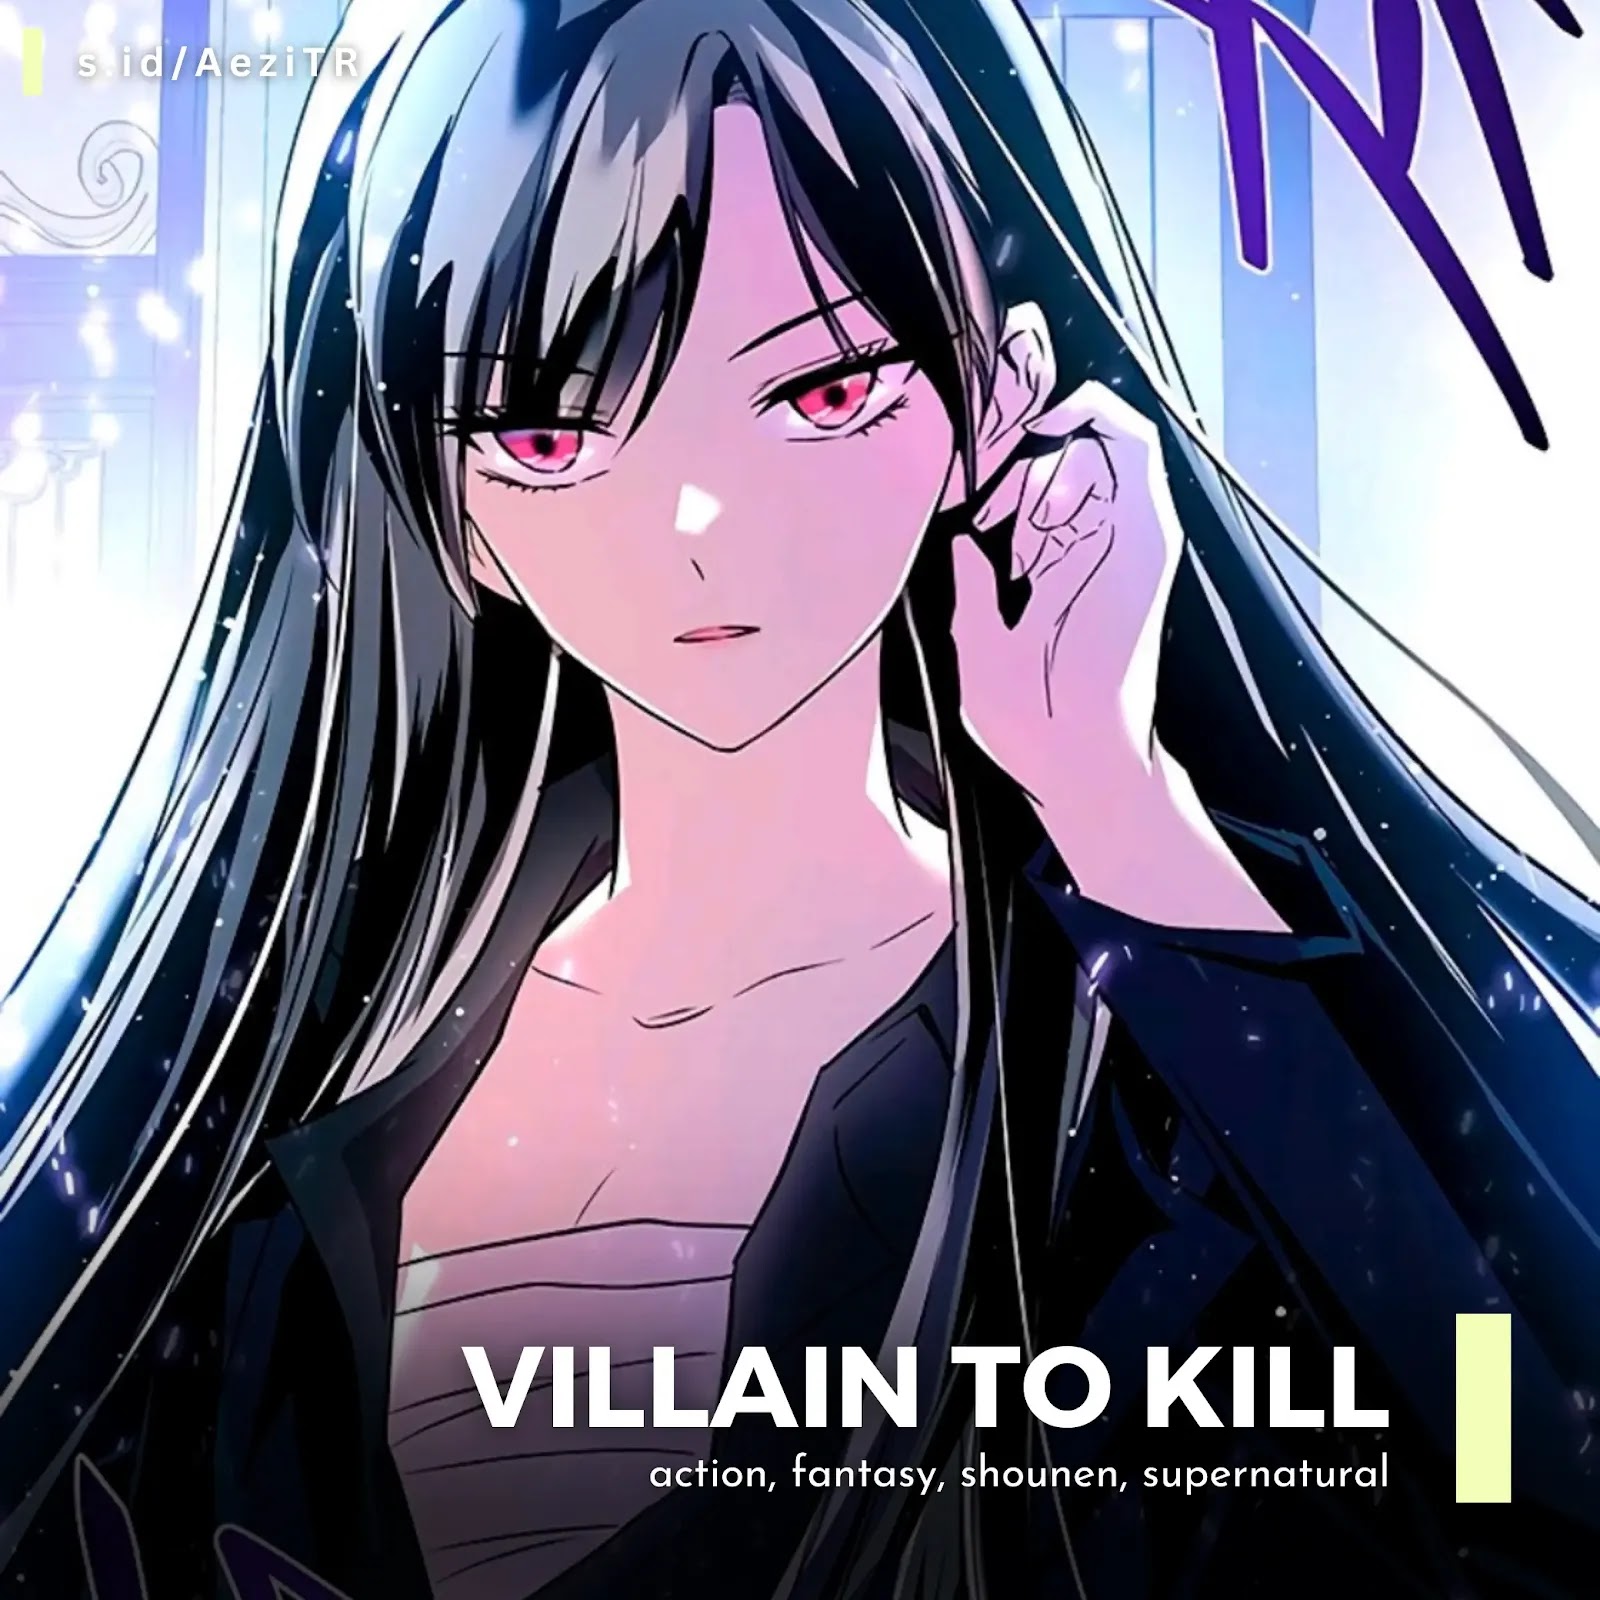 Review Villain to Kill (MOJIN) - Rekomendasi Manhwa Terbaik Tahun 2021 -@aezife